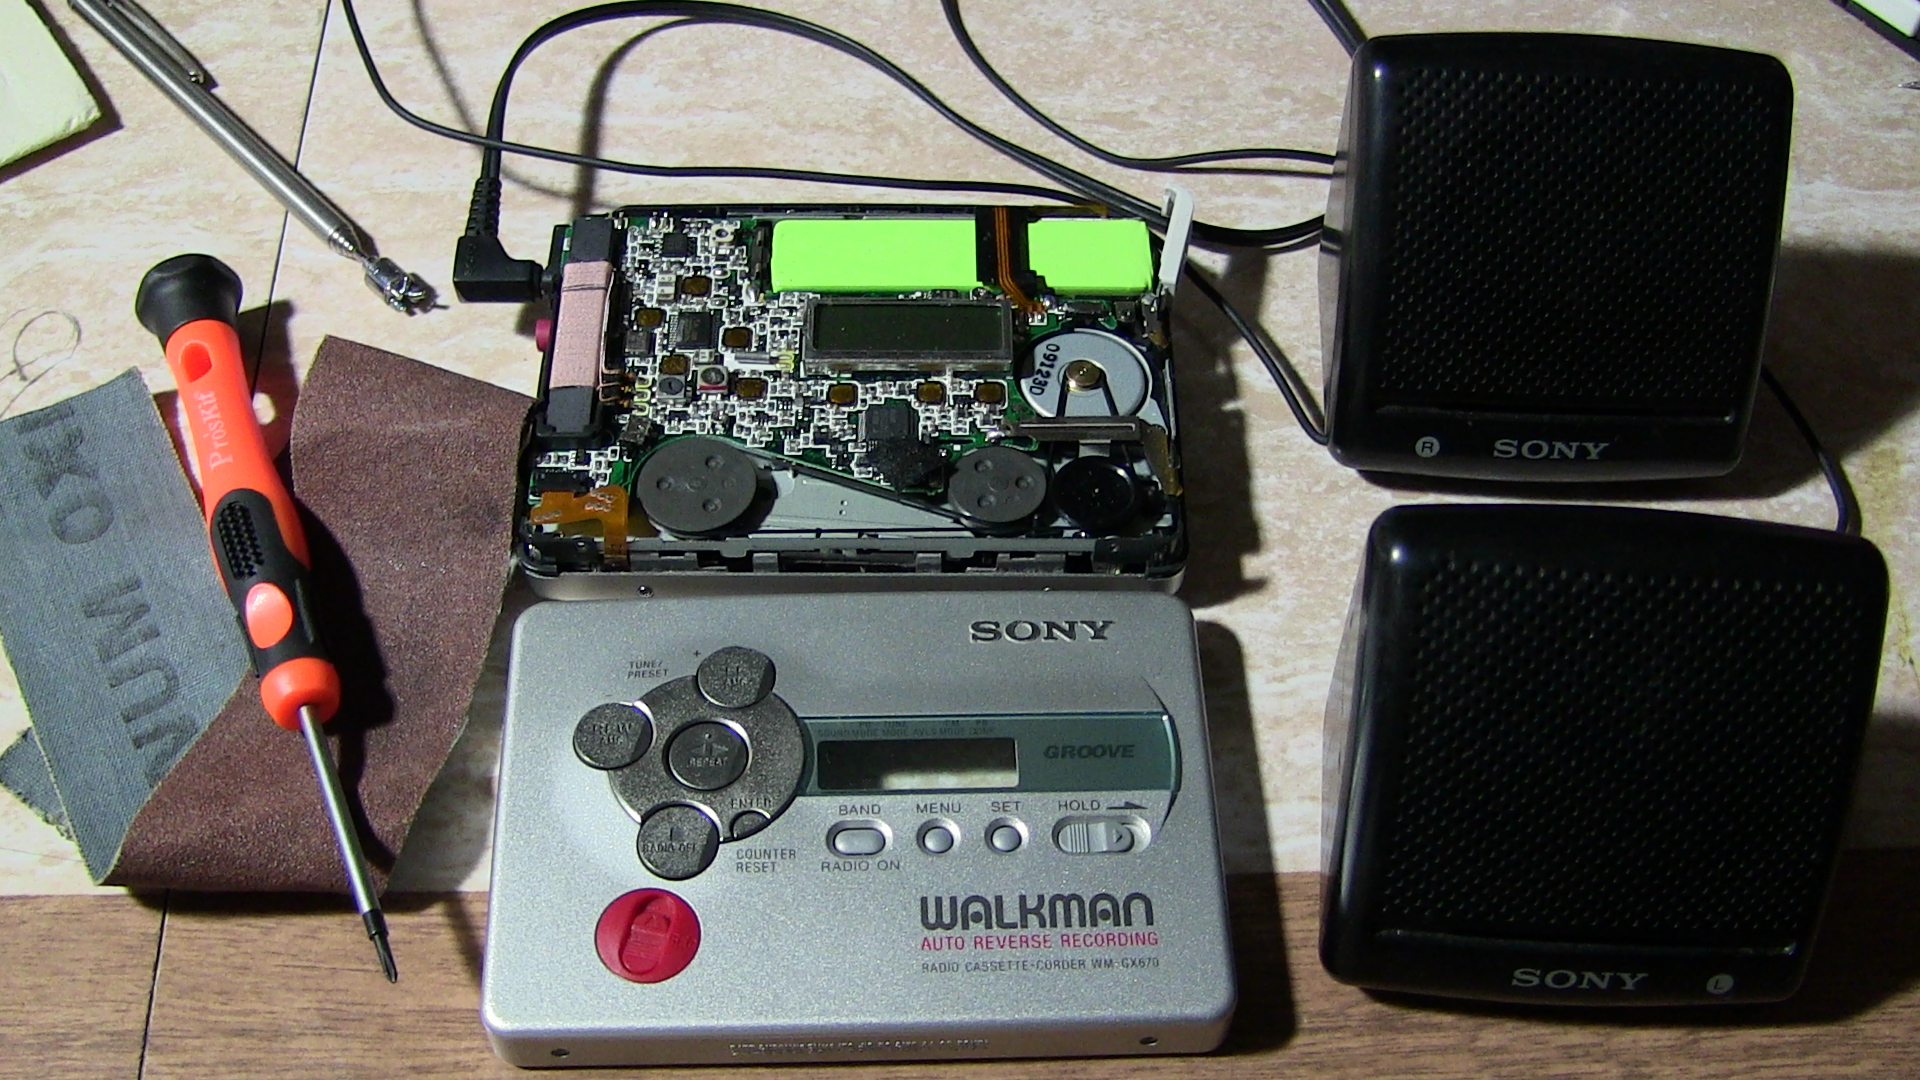 IMG_0445 Sony Walkman auto reverse recording radio cassette-corder WM-GX670.JPG